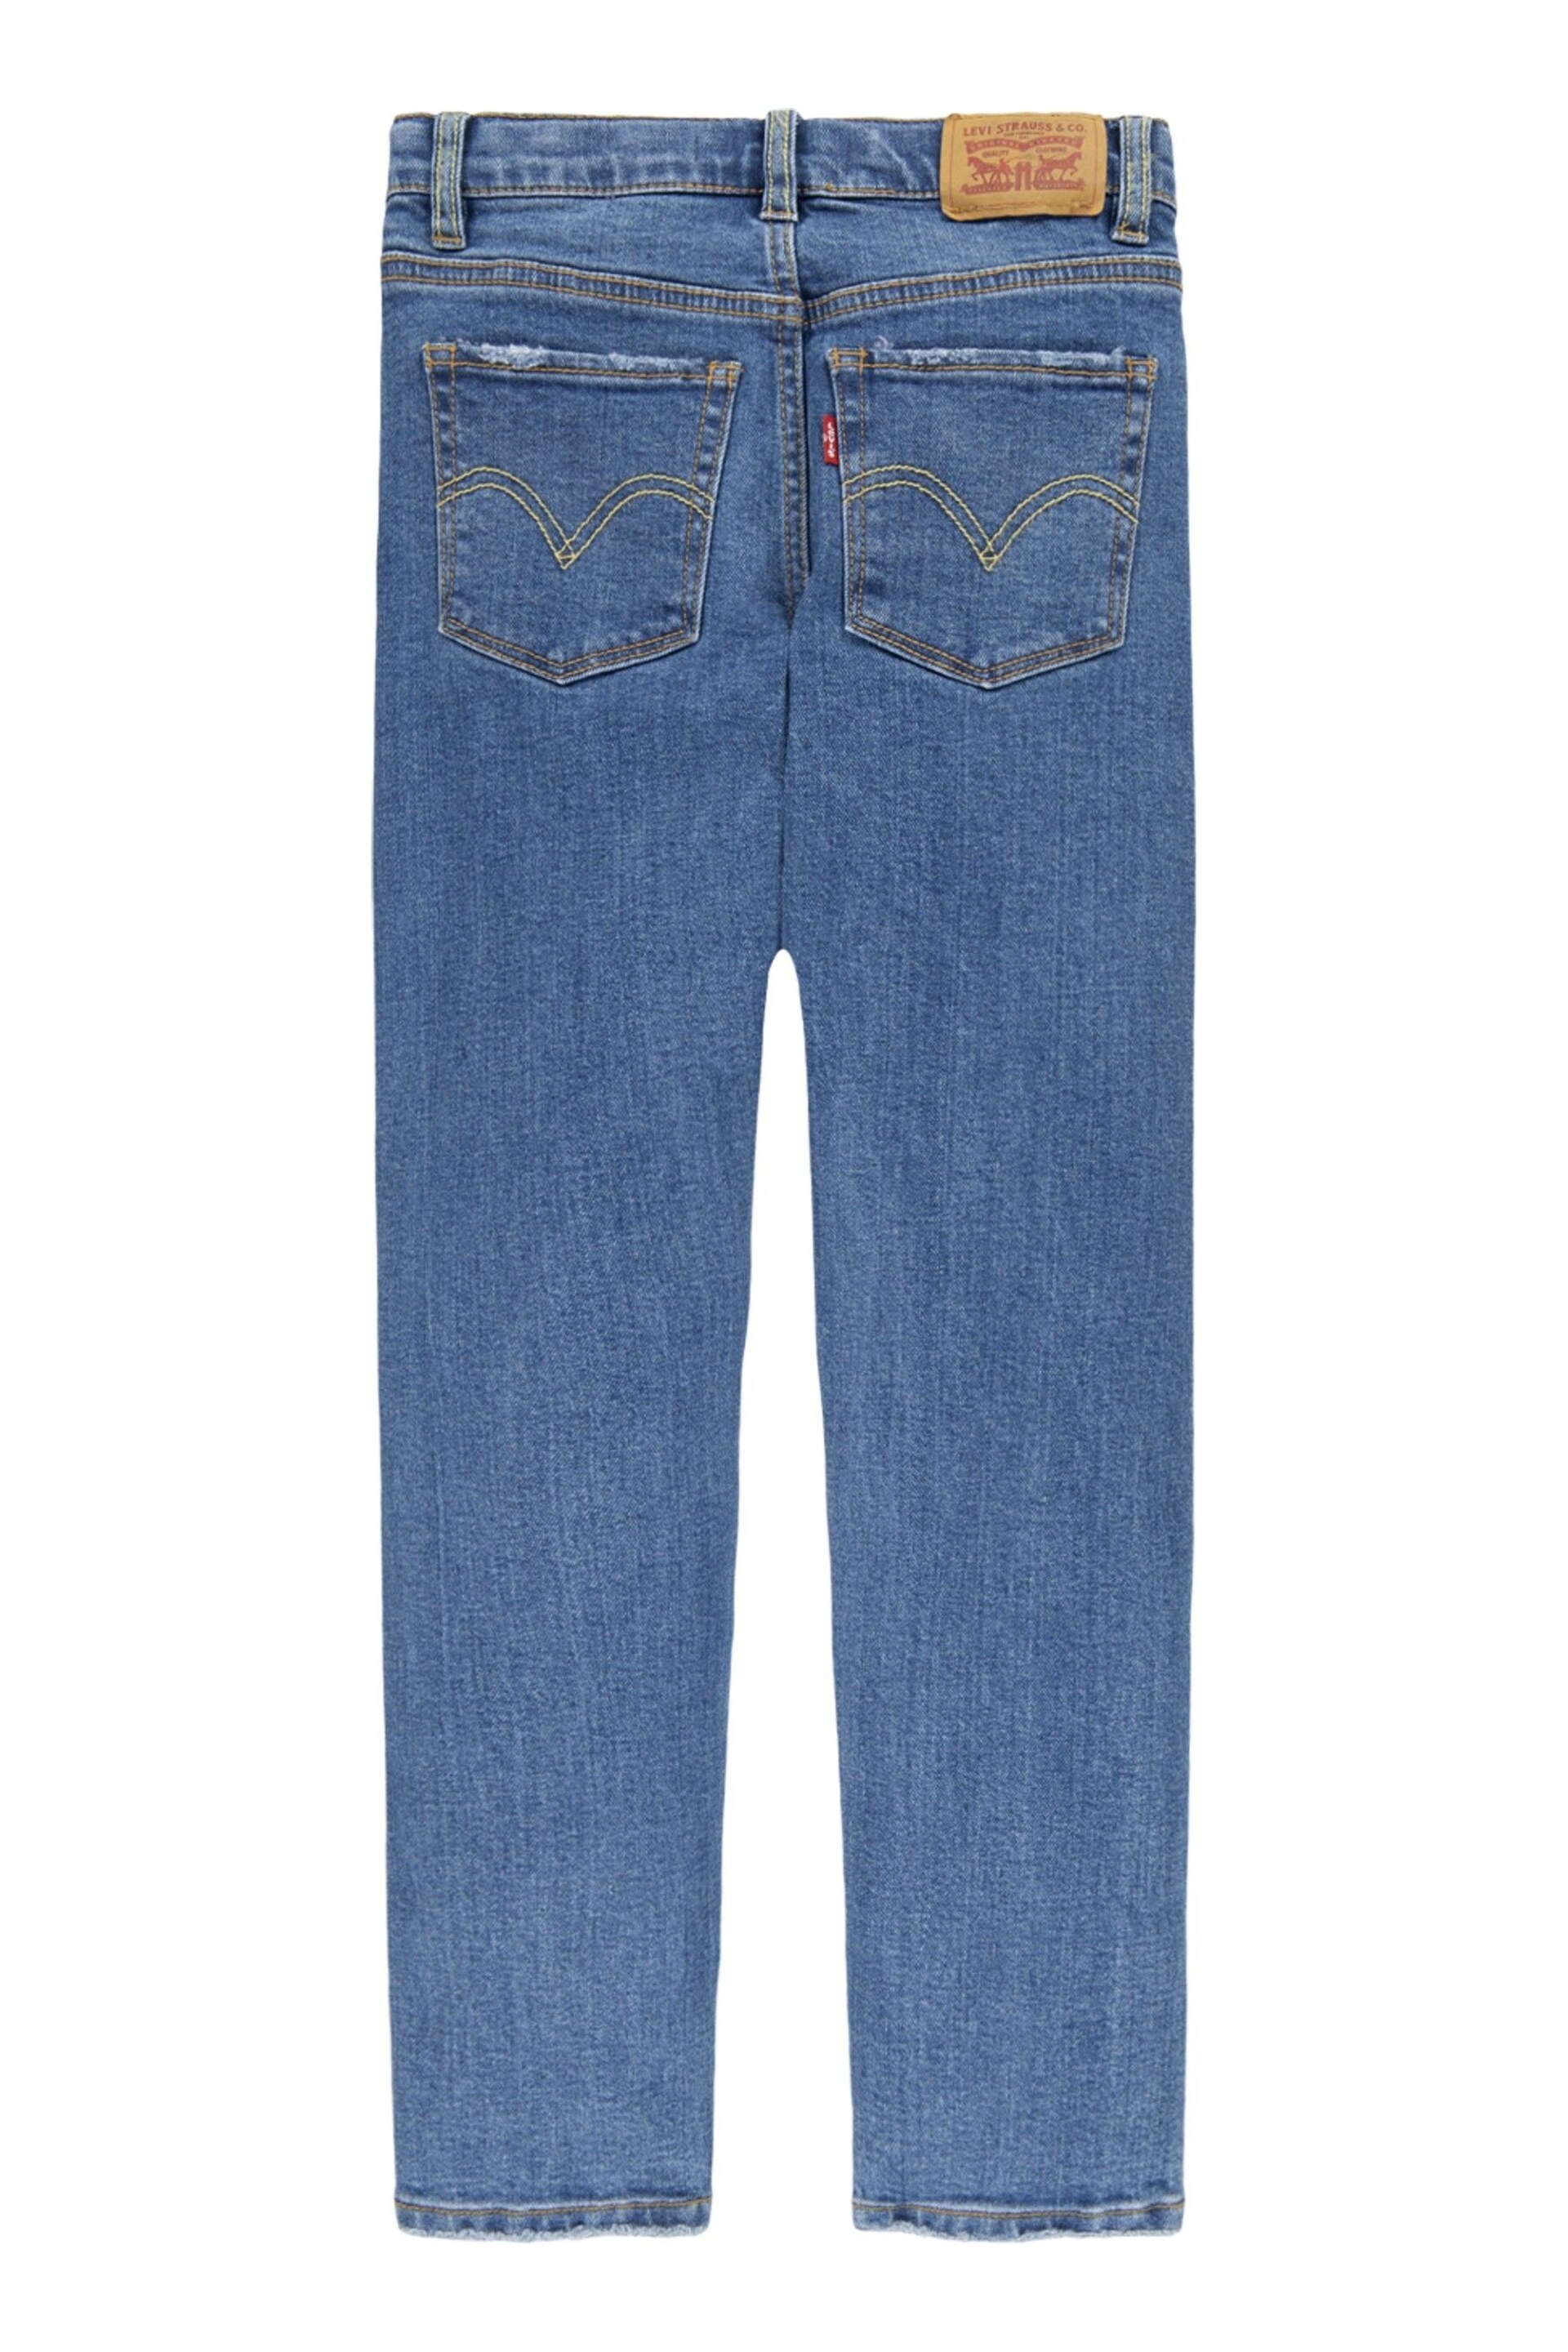 Levi's® Blue Original 501® Denim Jeans - Image 2 of 4